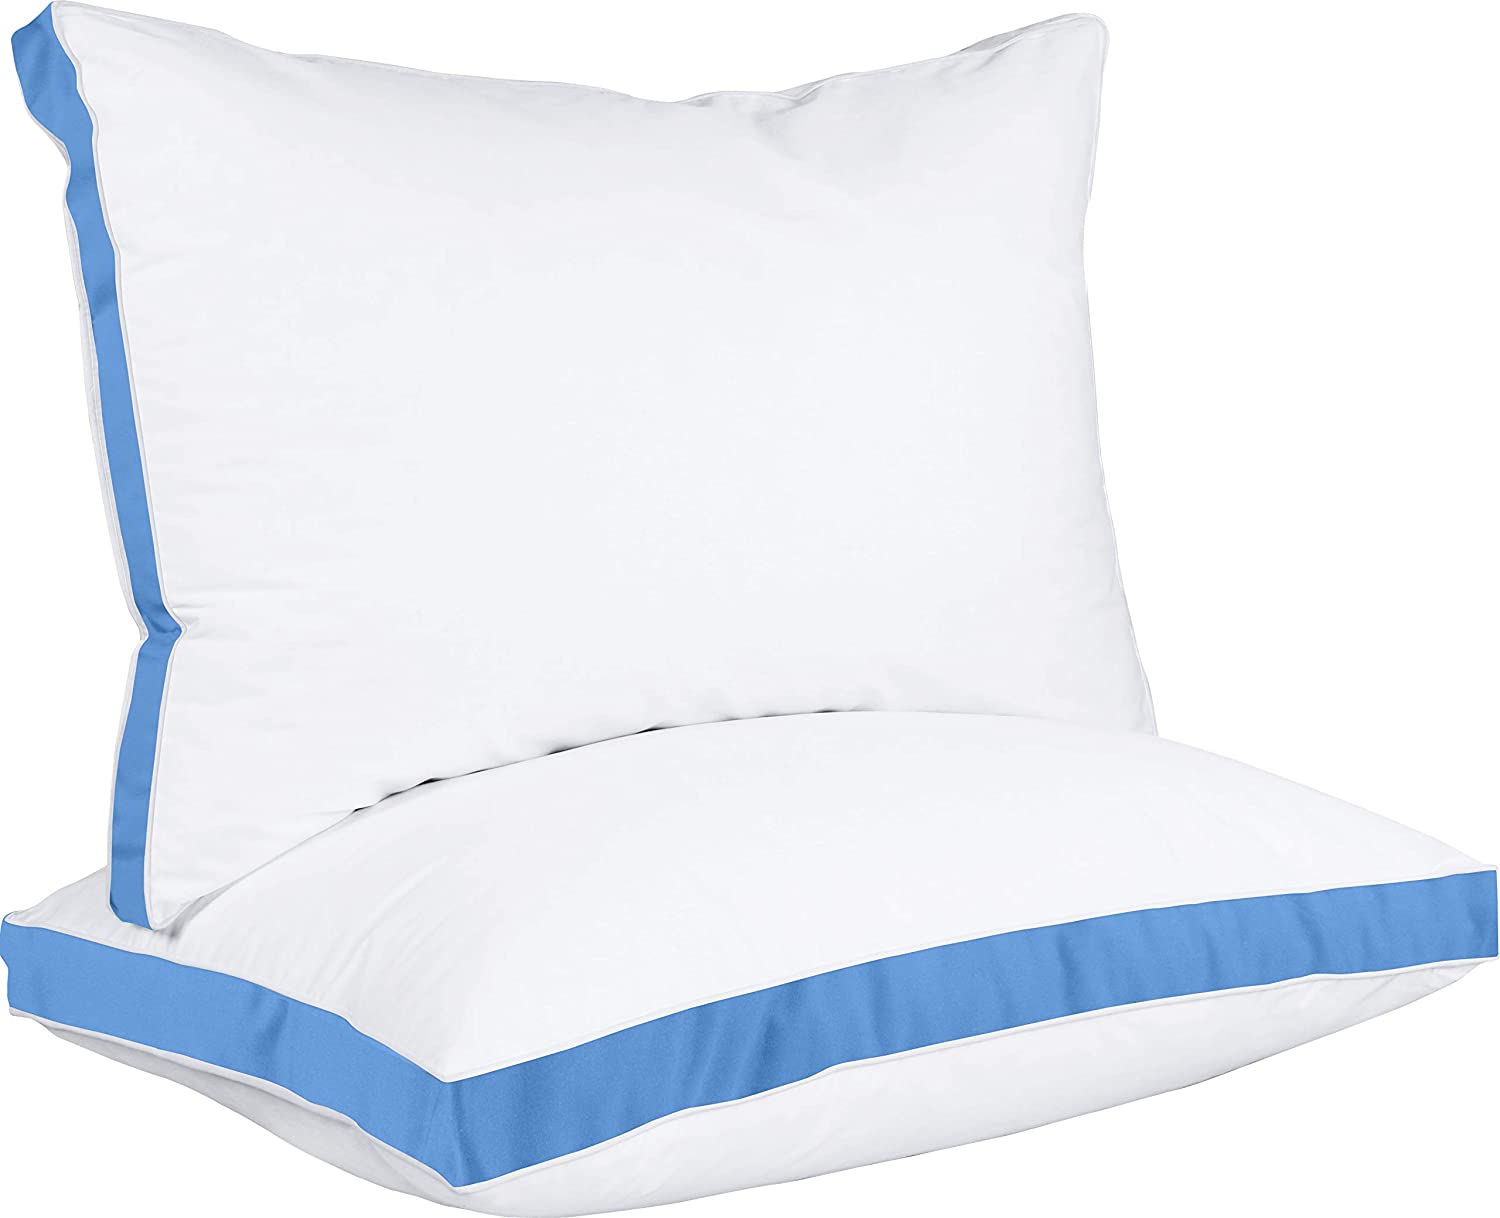 Utopia Bedding Throw Pillows Insert (Pack of 2, Orange) - 18 x 18